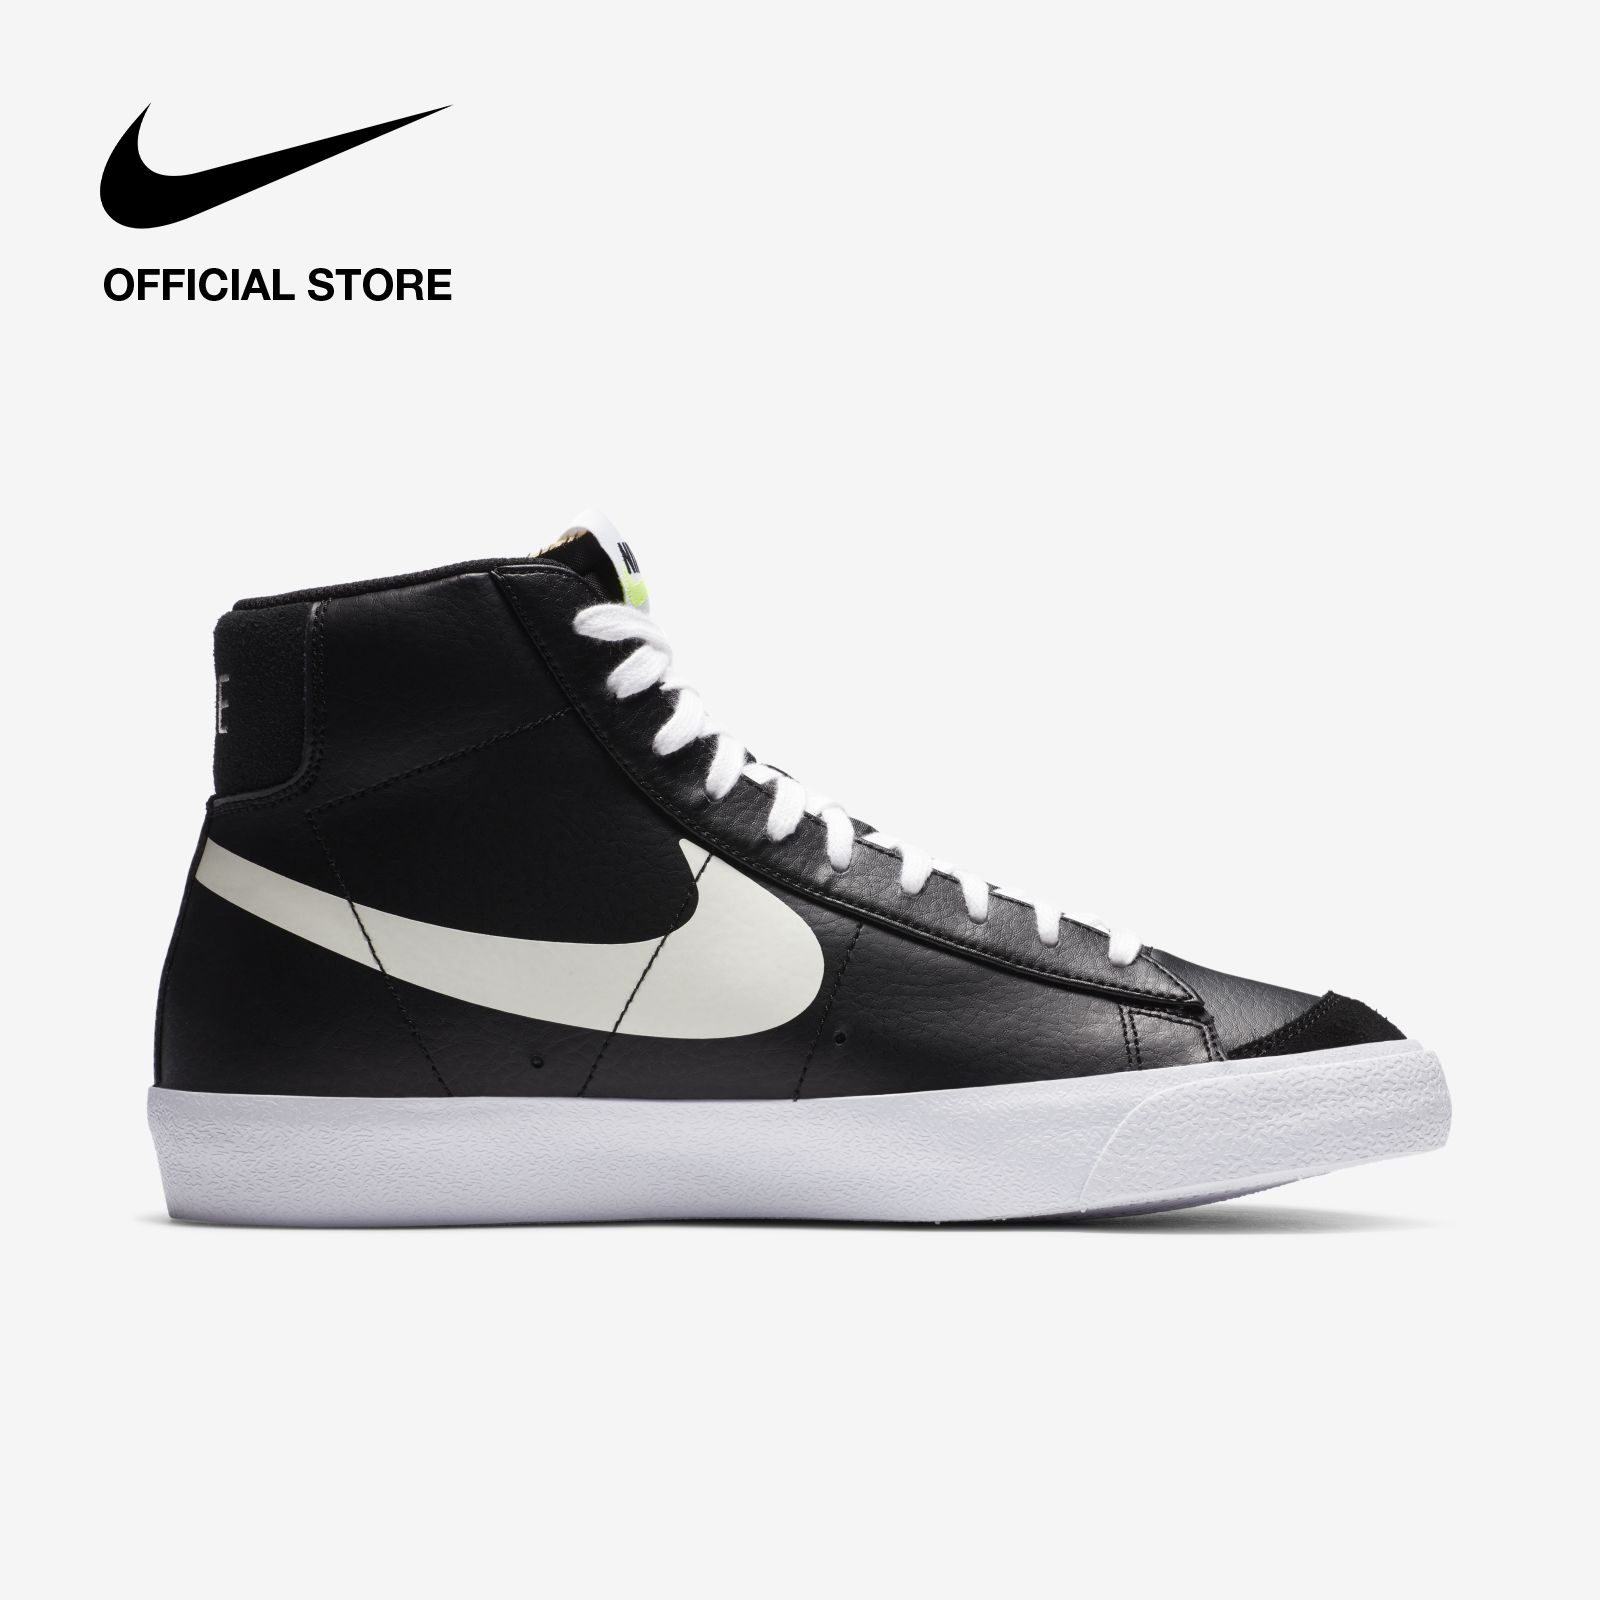 Nike Men's Blazer Mid '77 Shoes - Black รองเท้าผู้ชาย Nike Blazer Mid '77 - สีดำ